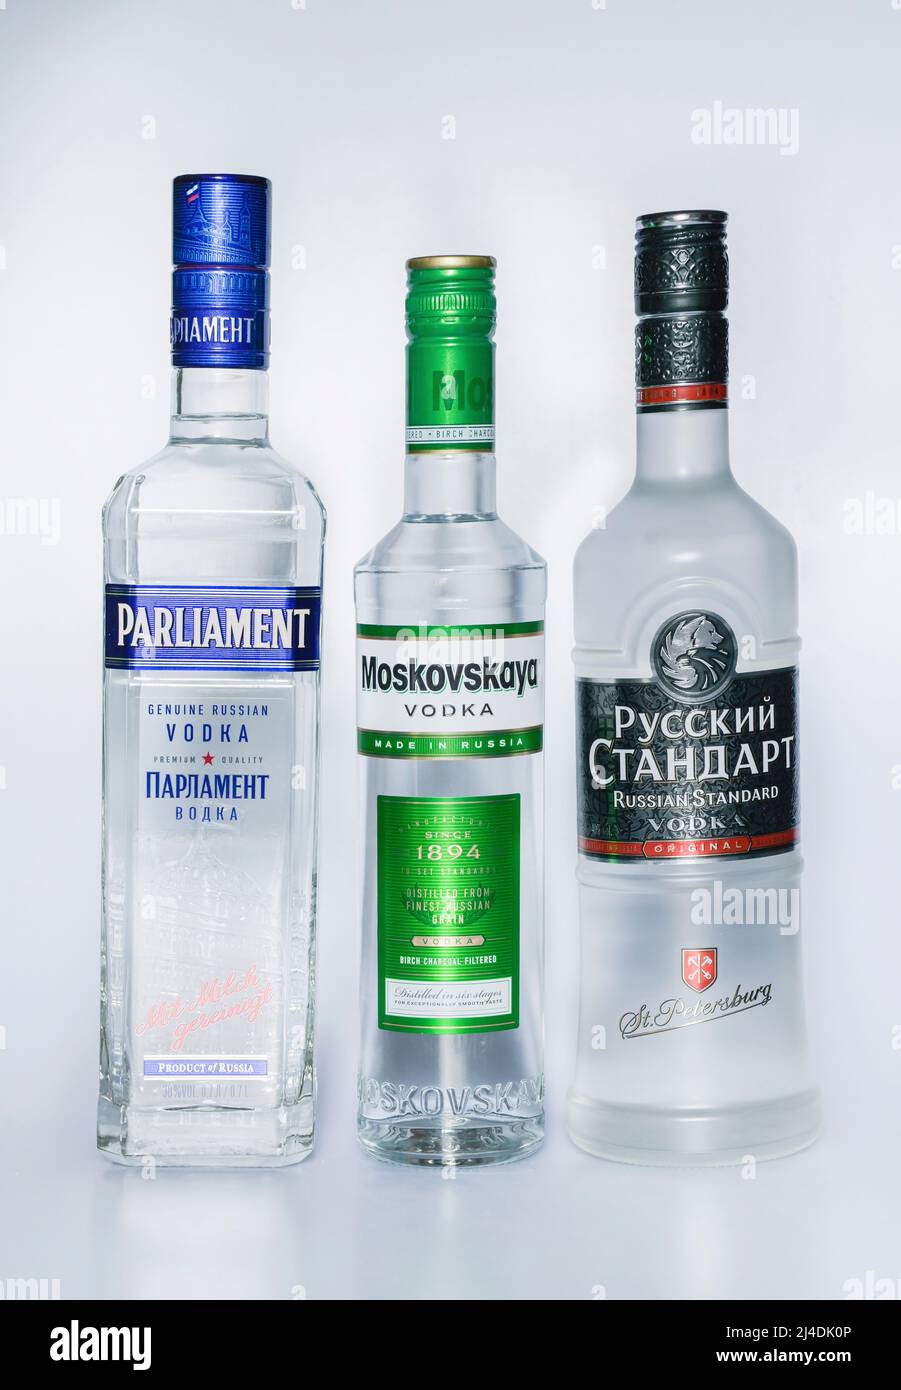 Parliament, Russkij Standart, Moskovskaya, 3 Flaschen echt russischer Wodka Stock Photo